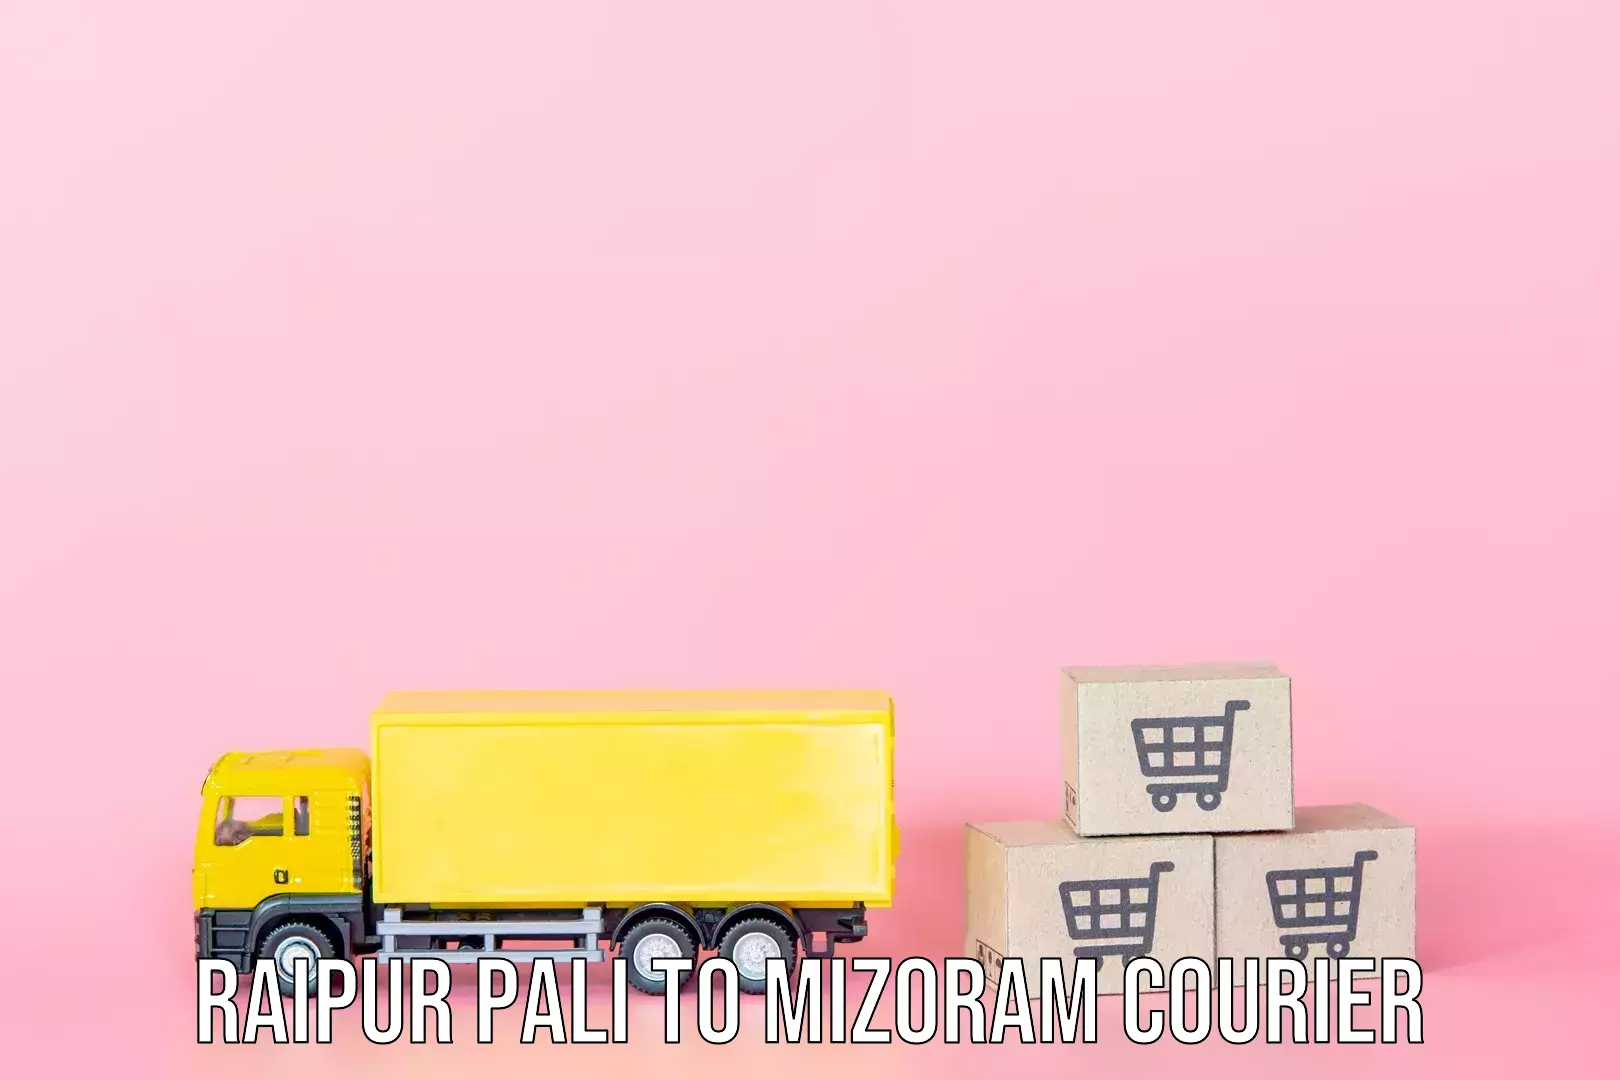 Luggage delivery app Raipur Pali to Mizoram